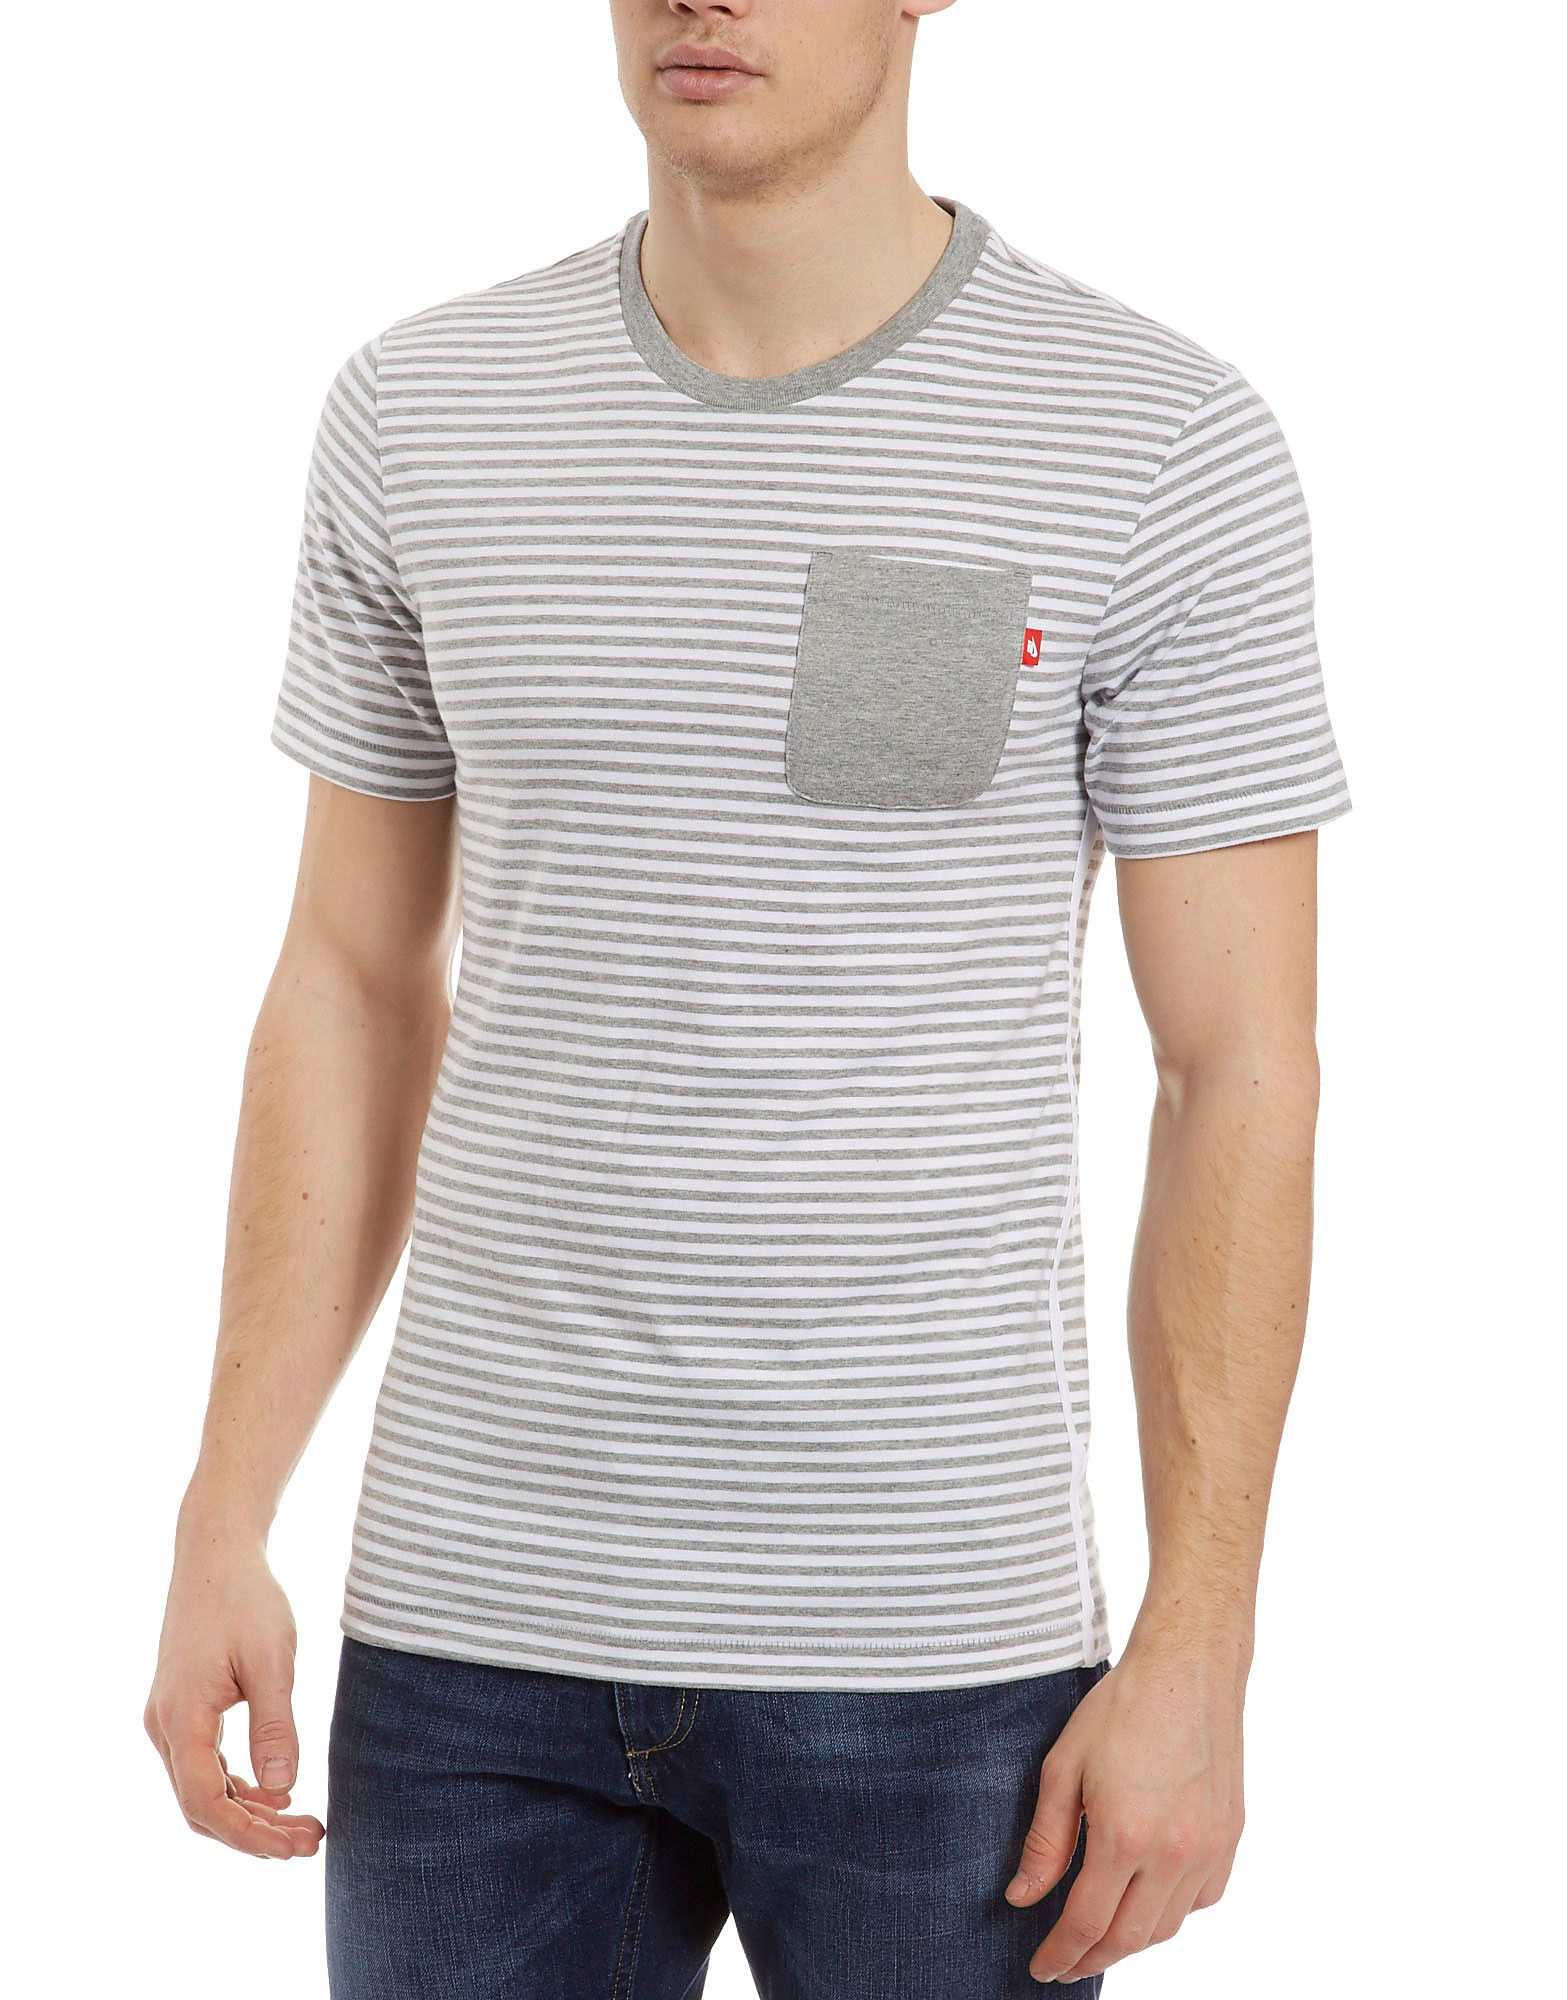 Nike Glory Striped Pocket T-Shirt